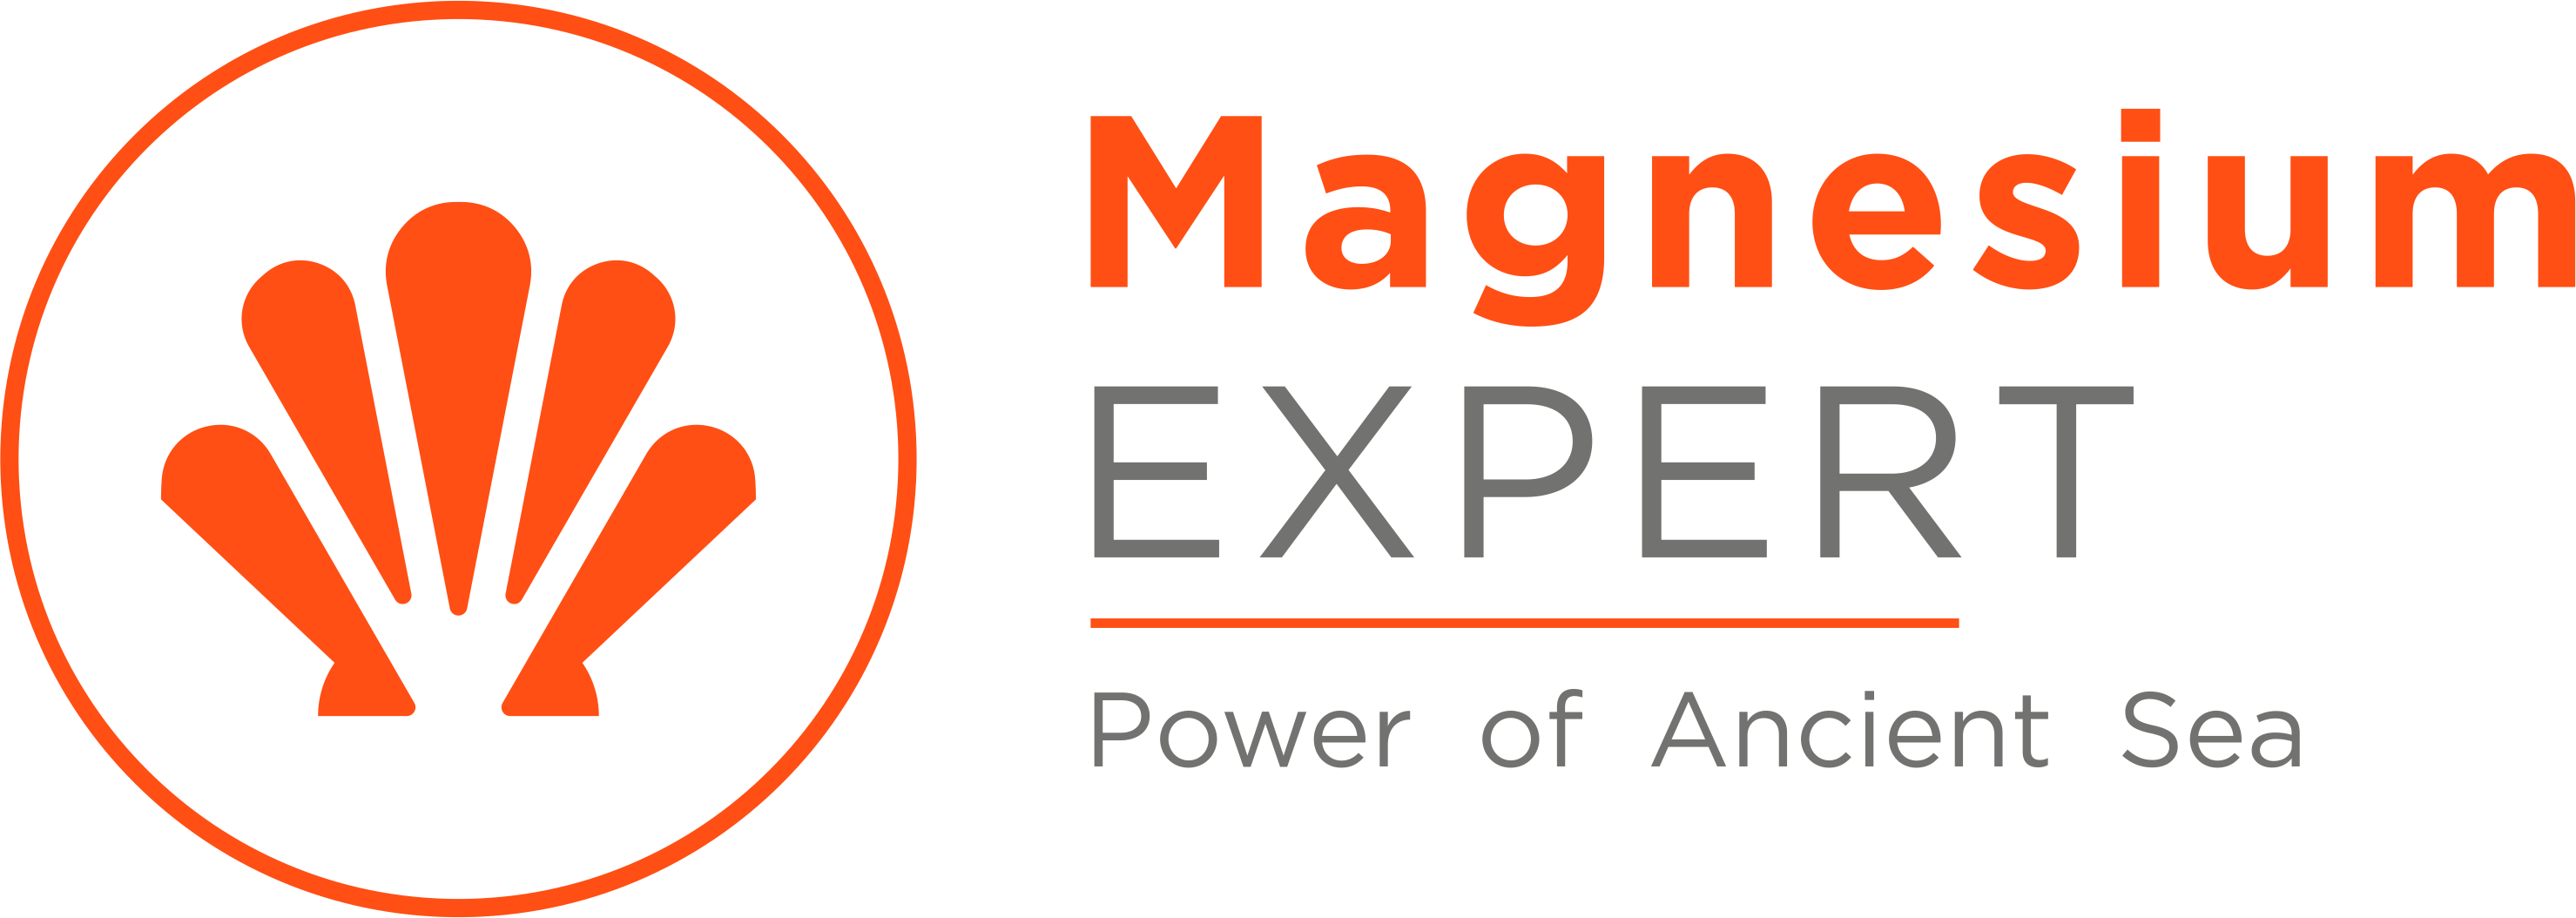 MagnesiumExpert_RU